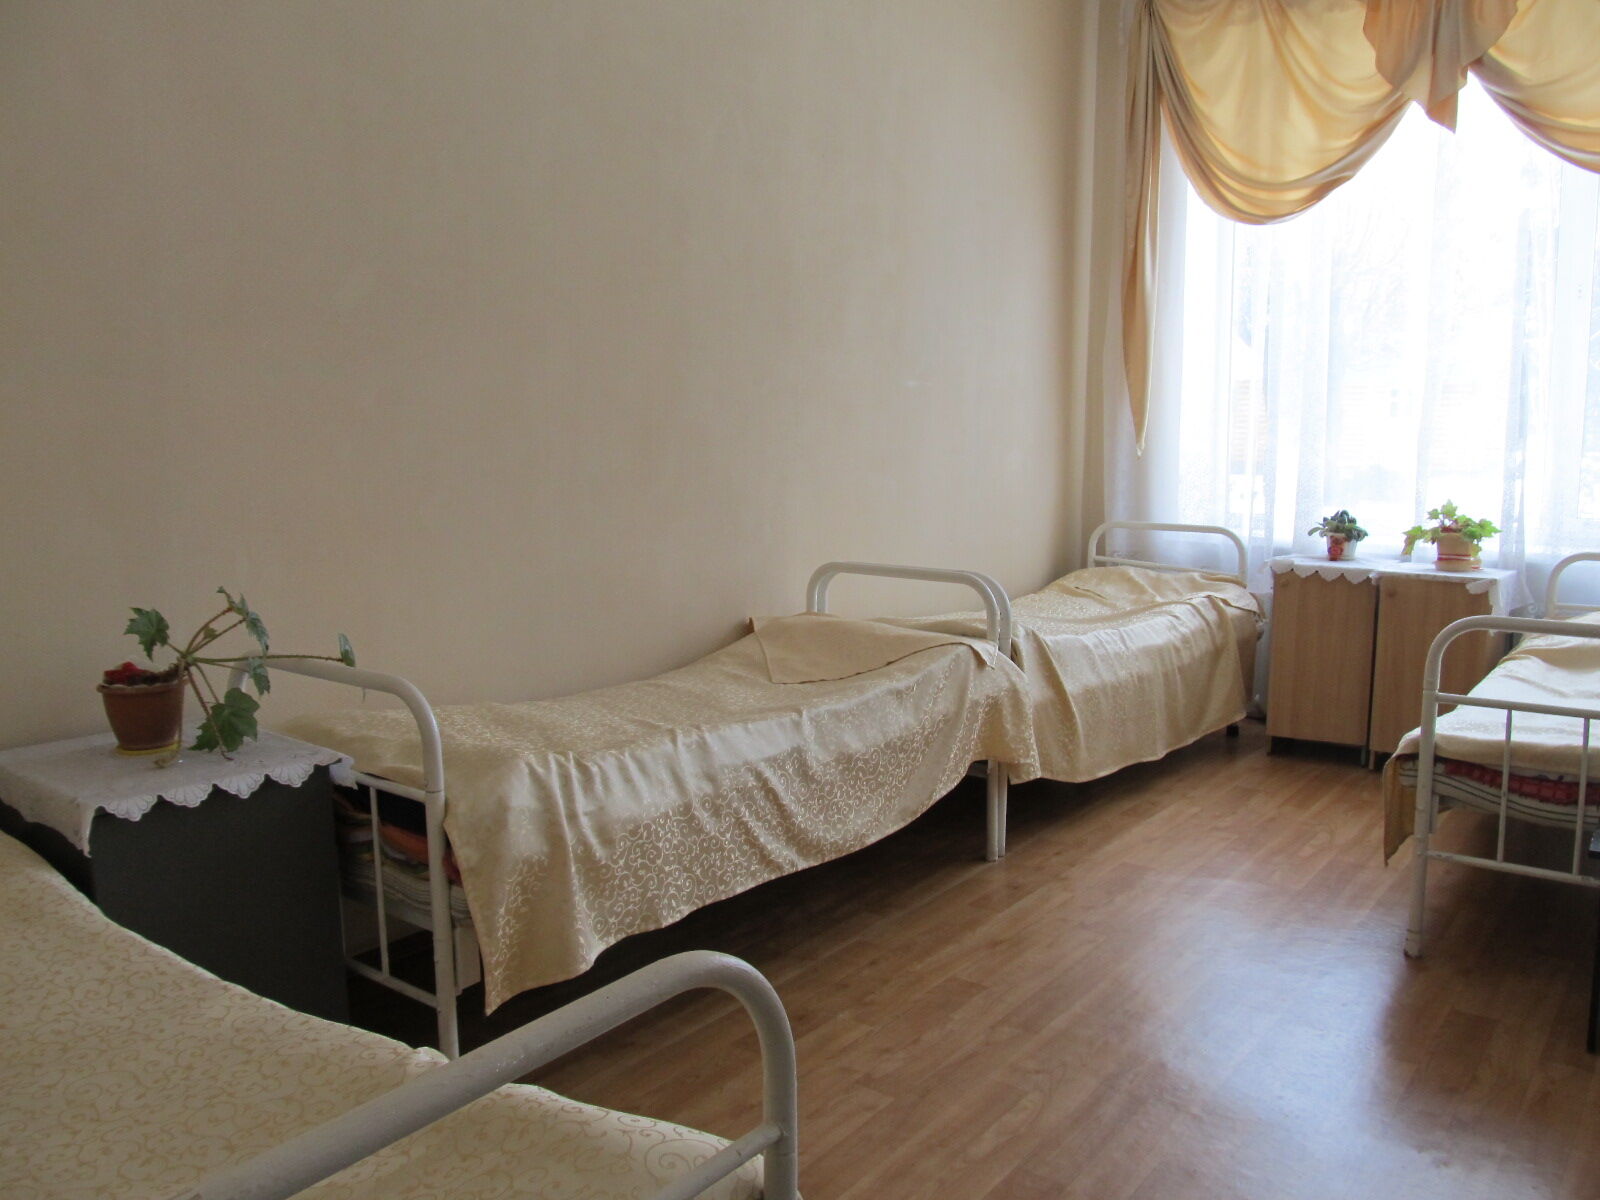 Комната, где живет Алена Зайцева